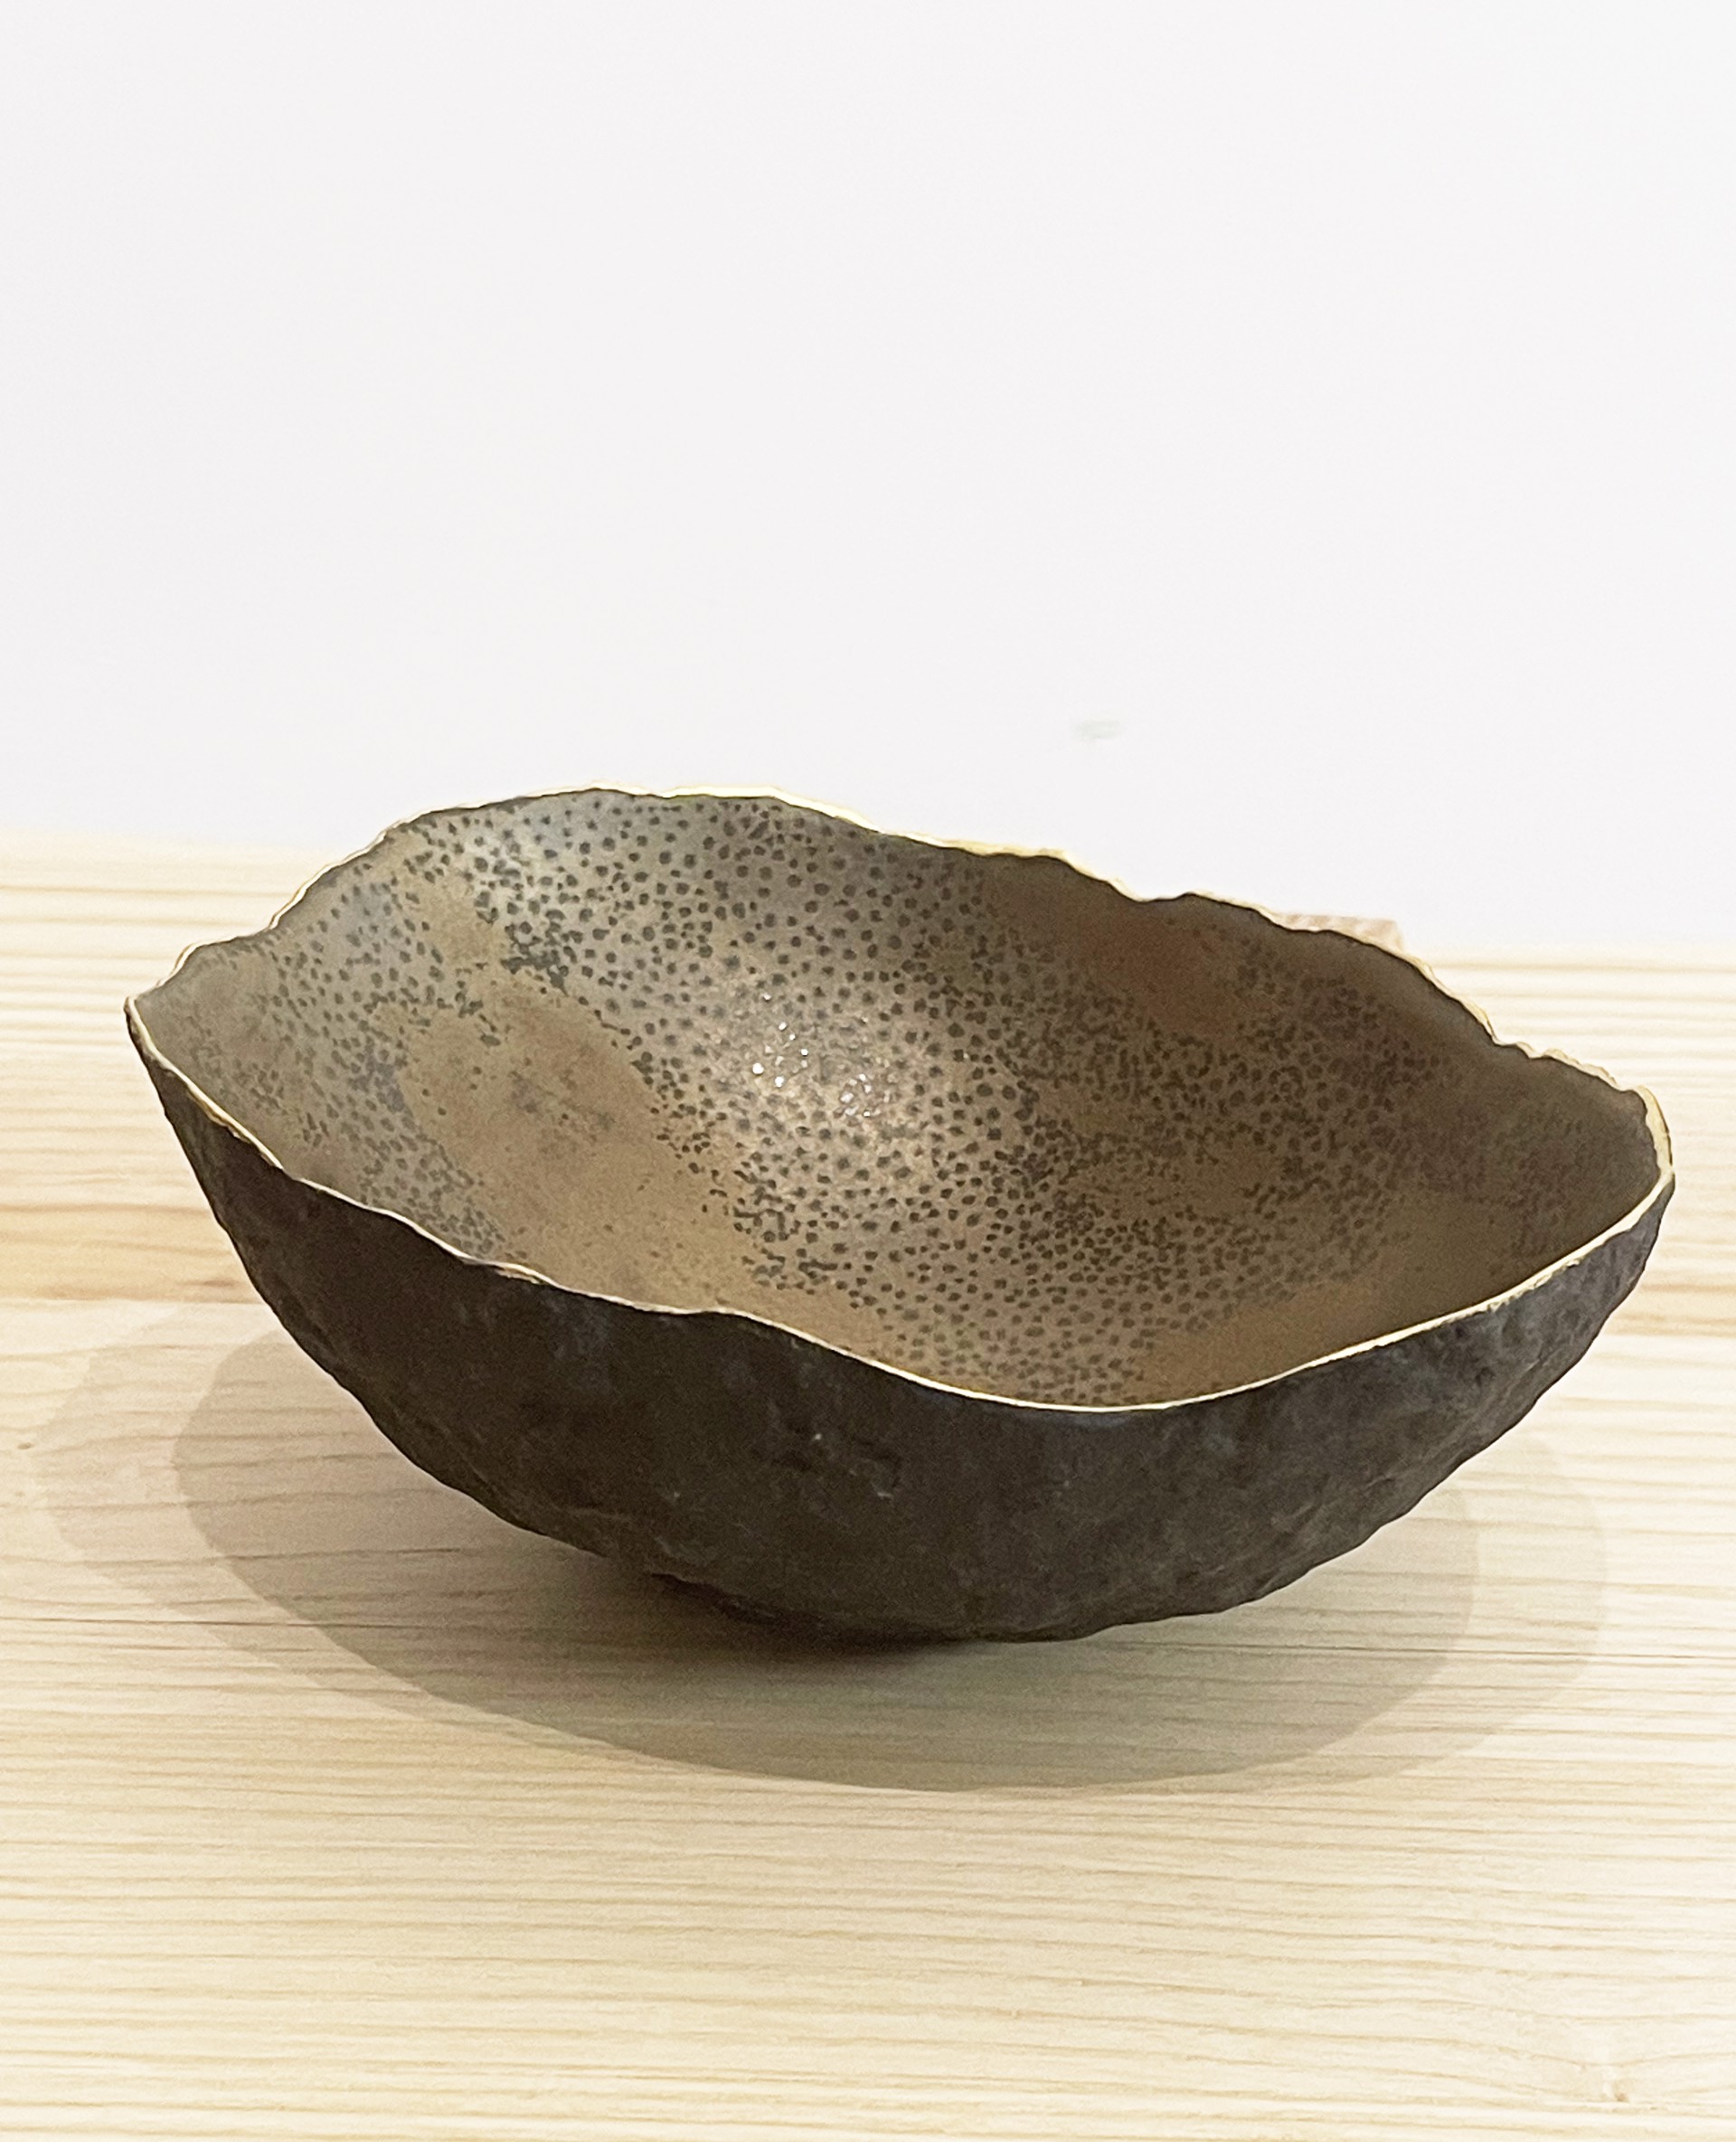 Ceramic with 3 glazes by Cristina Salusti